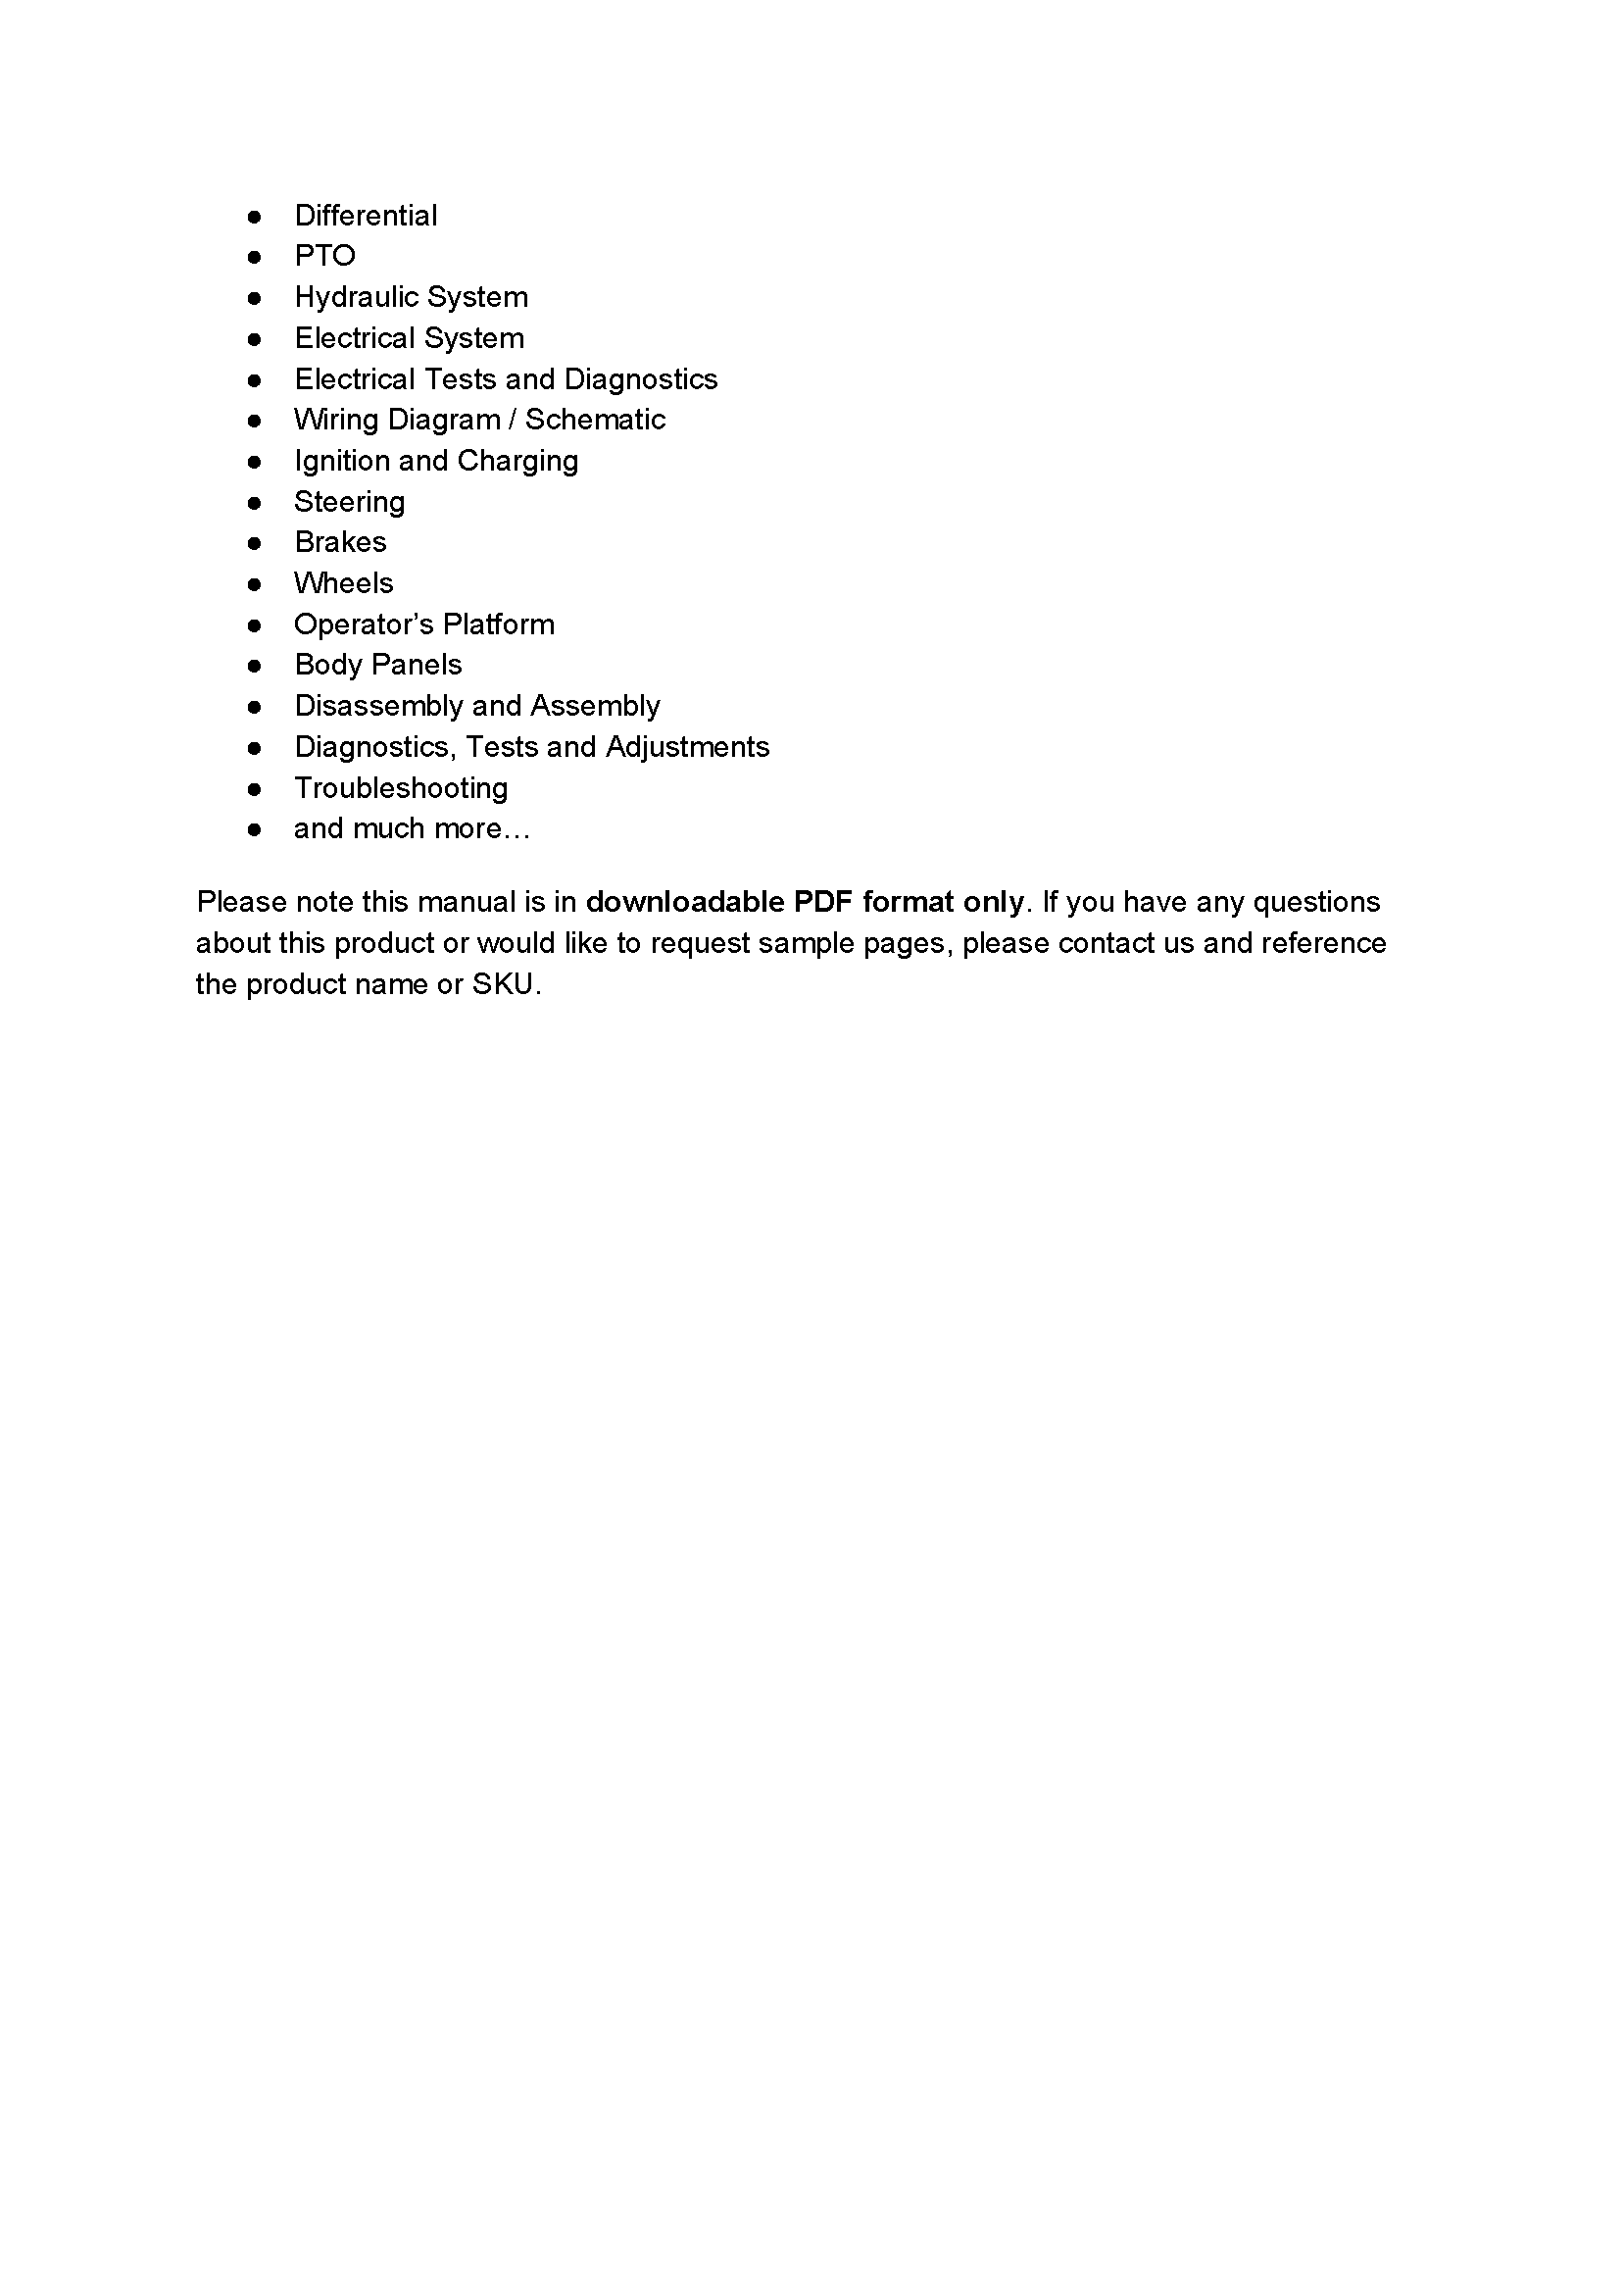 John Deere 4930 Self-Propelled Sprayers manual pdf